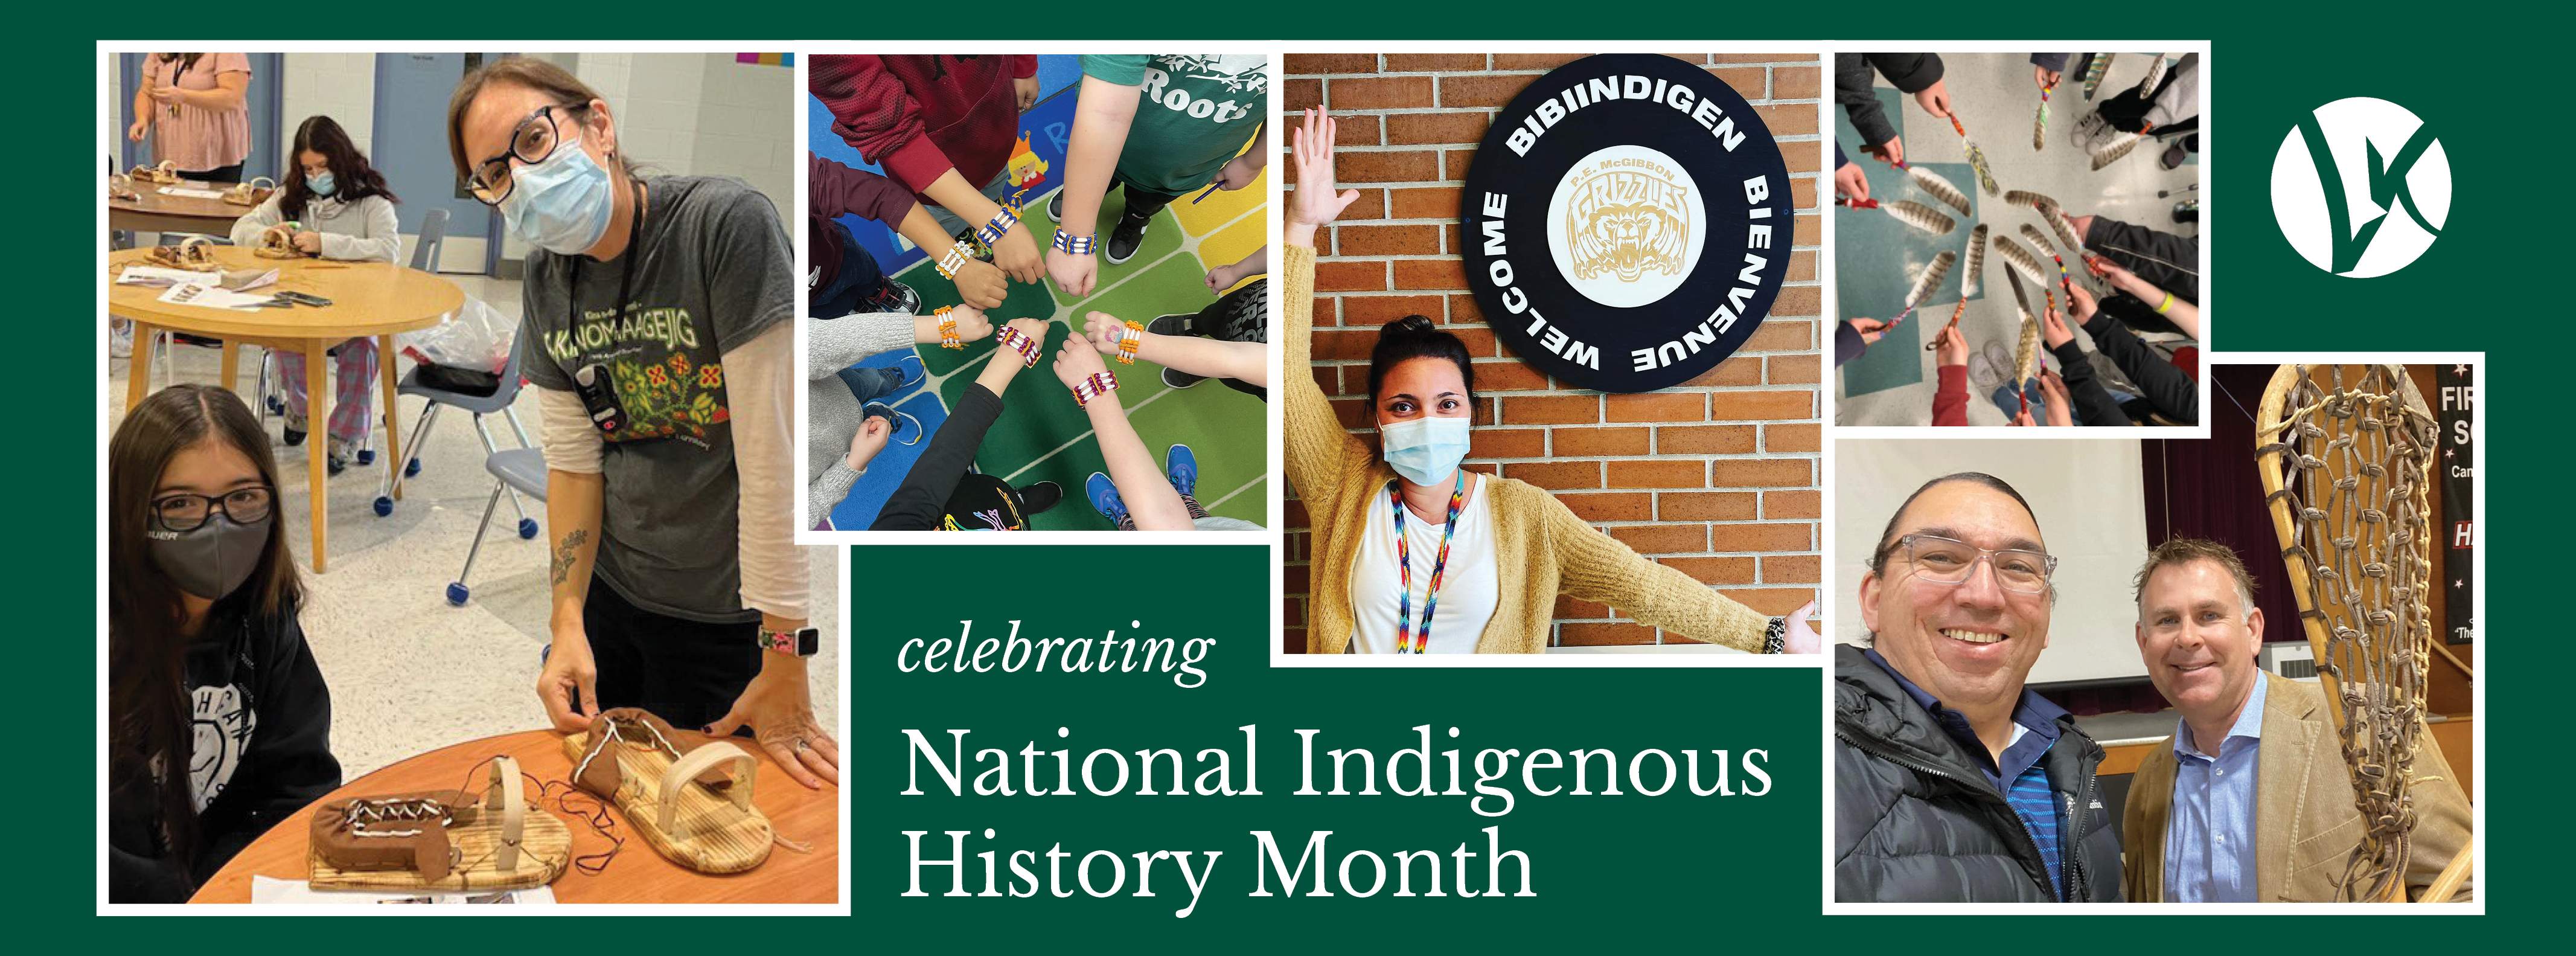 National Indigenous History Month - website banner.png